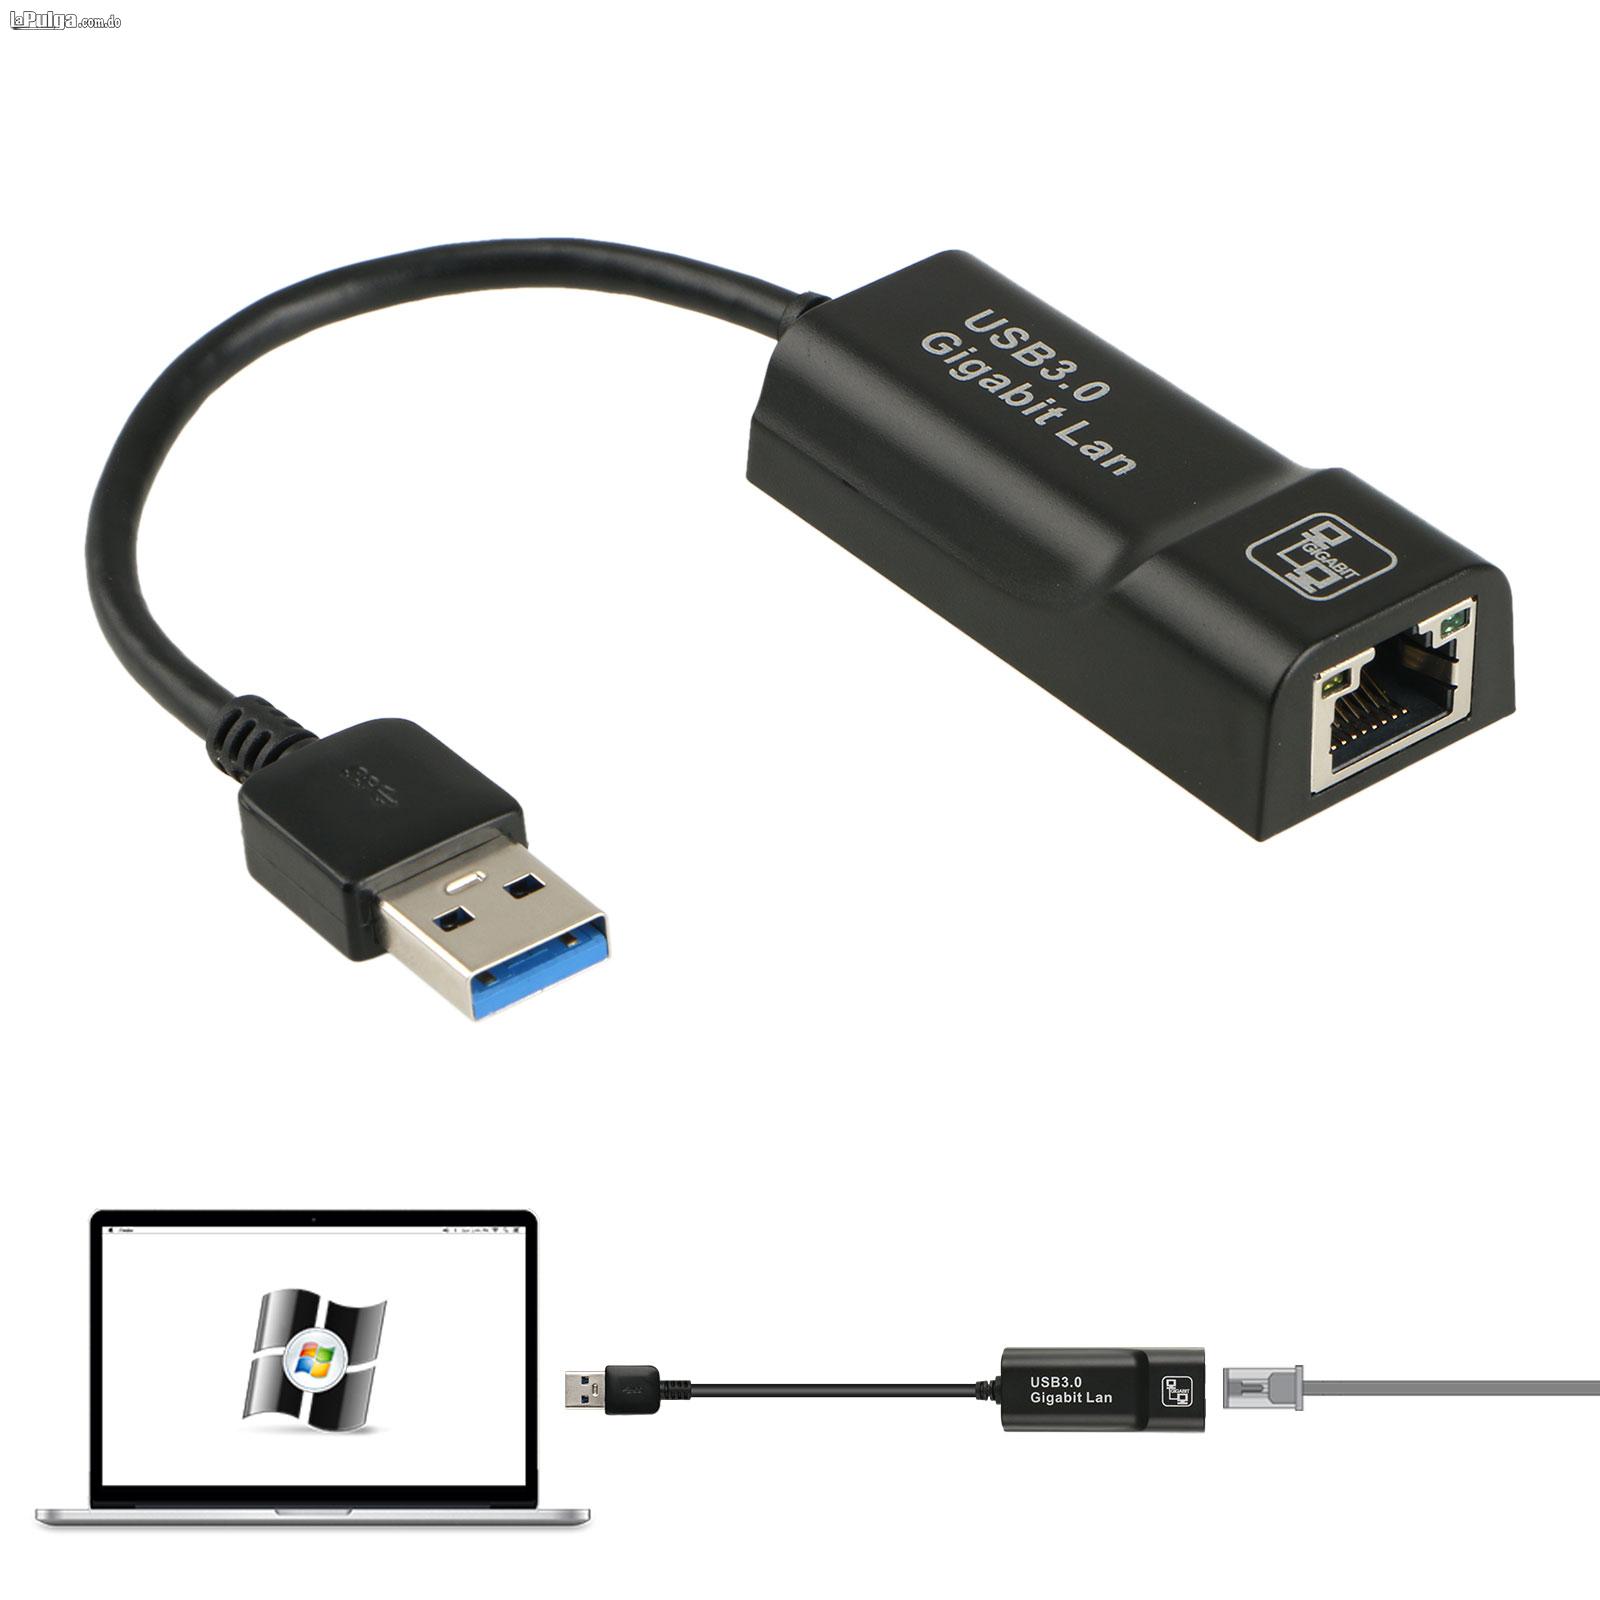 USB 3.0 a 10/100/1000 Gigabit RJ45 Ethernet LAN adaptador de red 1000M Foto 7014132-4.jpg